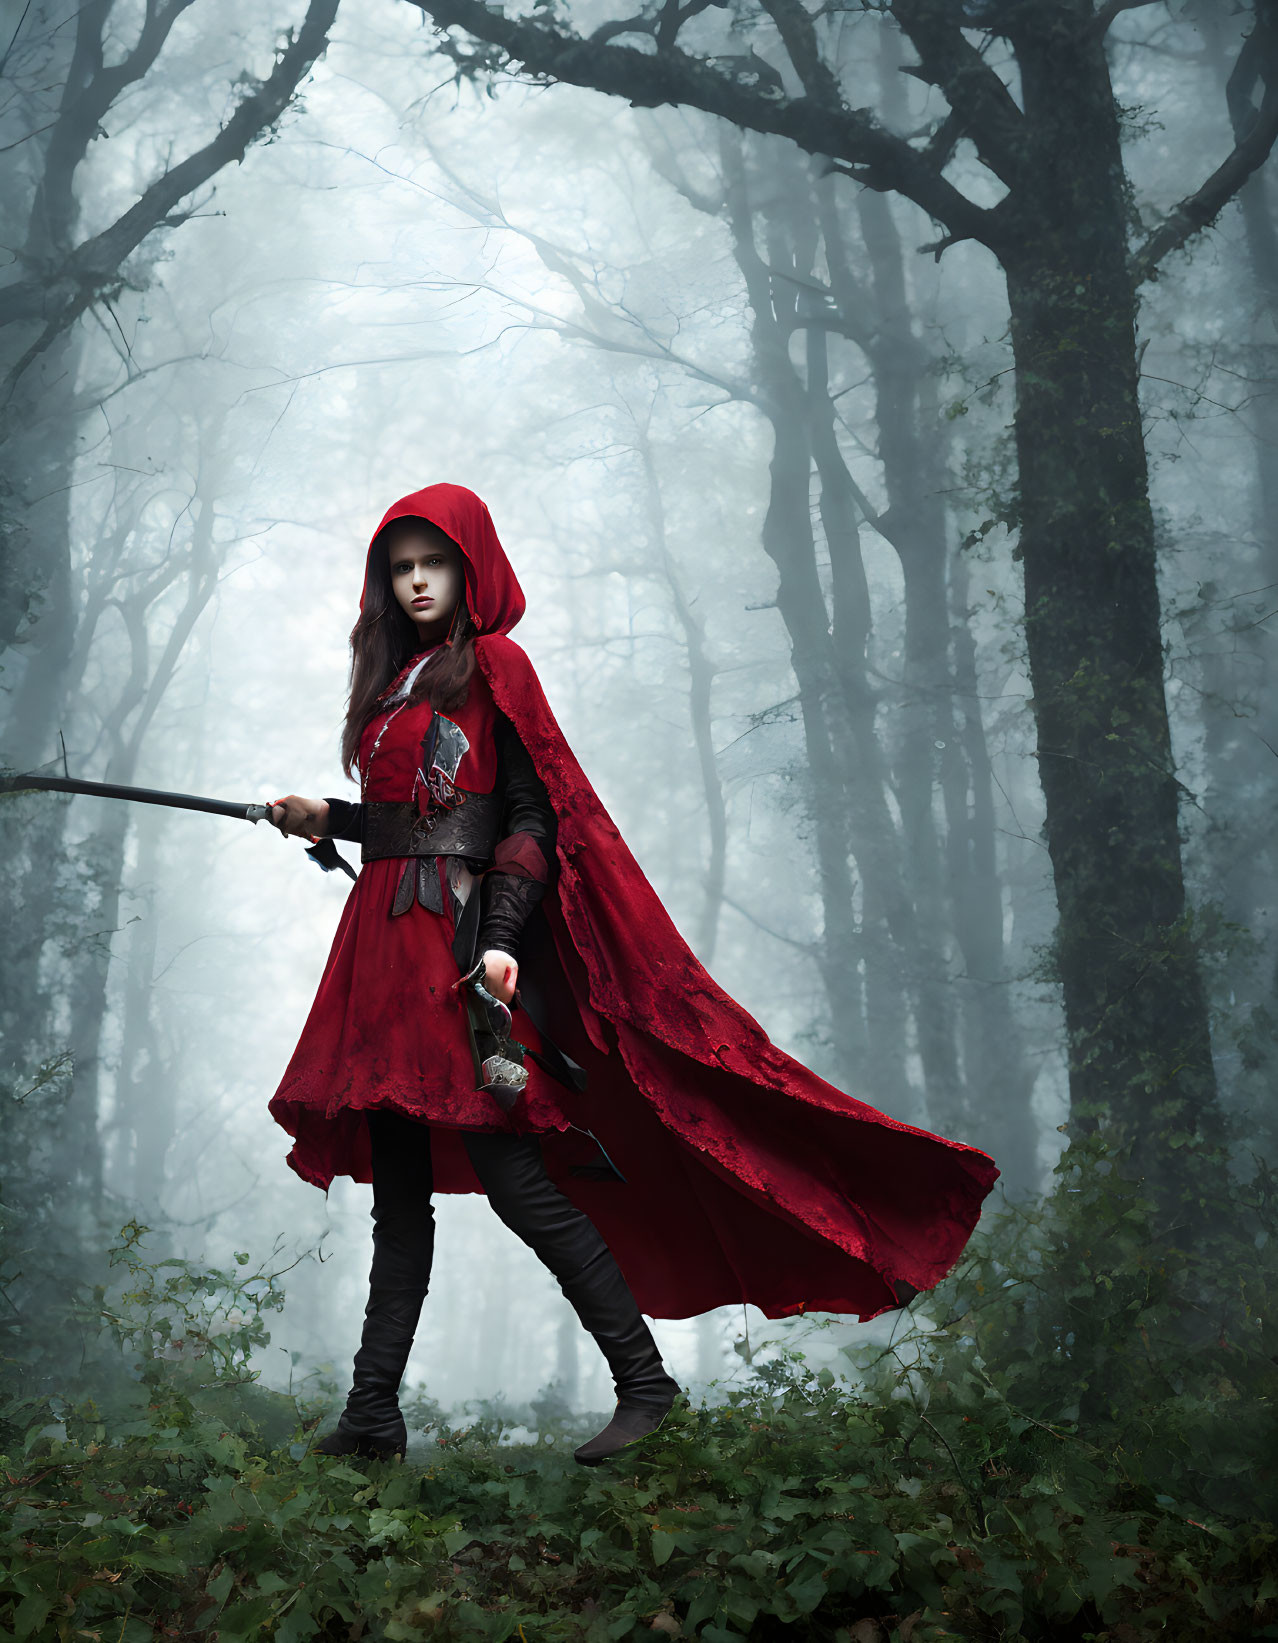 Big Red Riding Hood